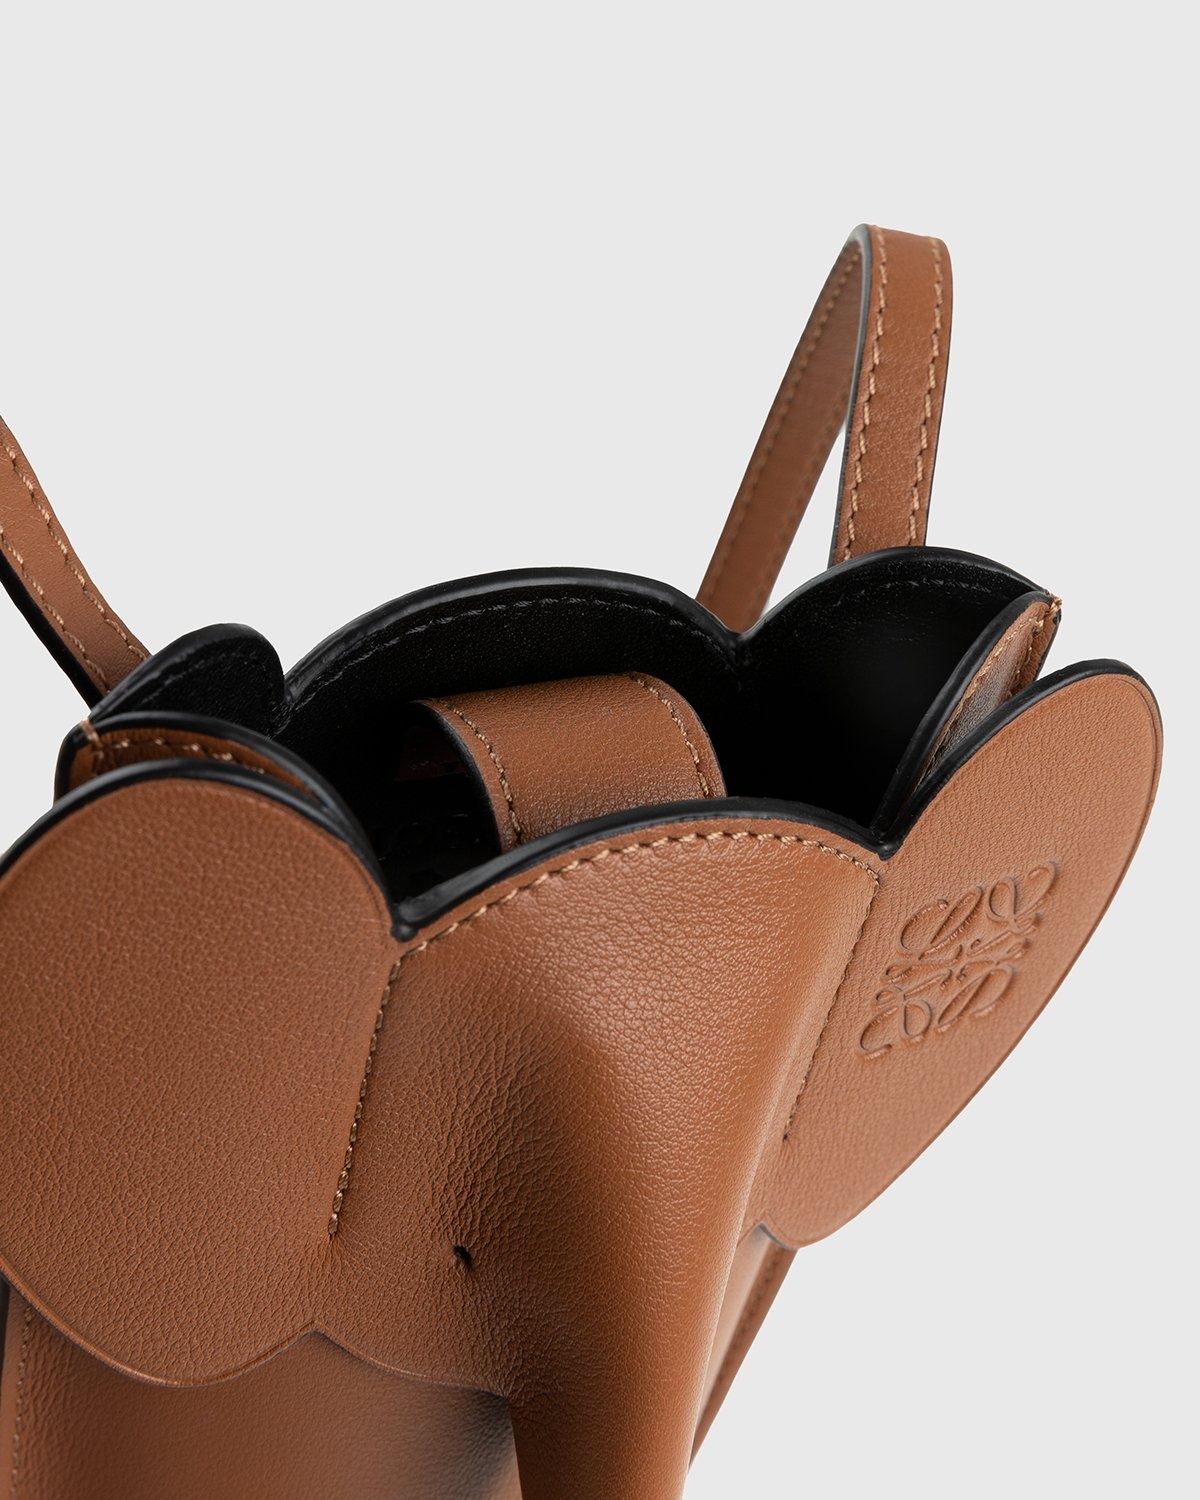 Loewe – Paula's Ibiza Elephant Pouch Tan - Shoulder Bags - Beige - Image 4